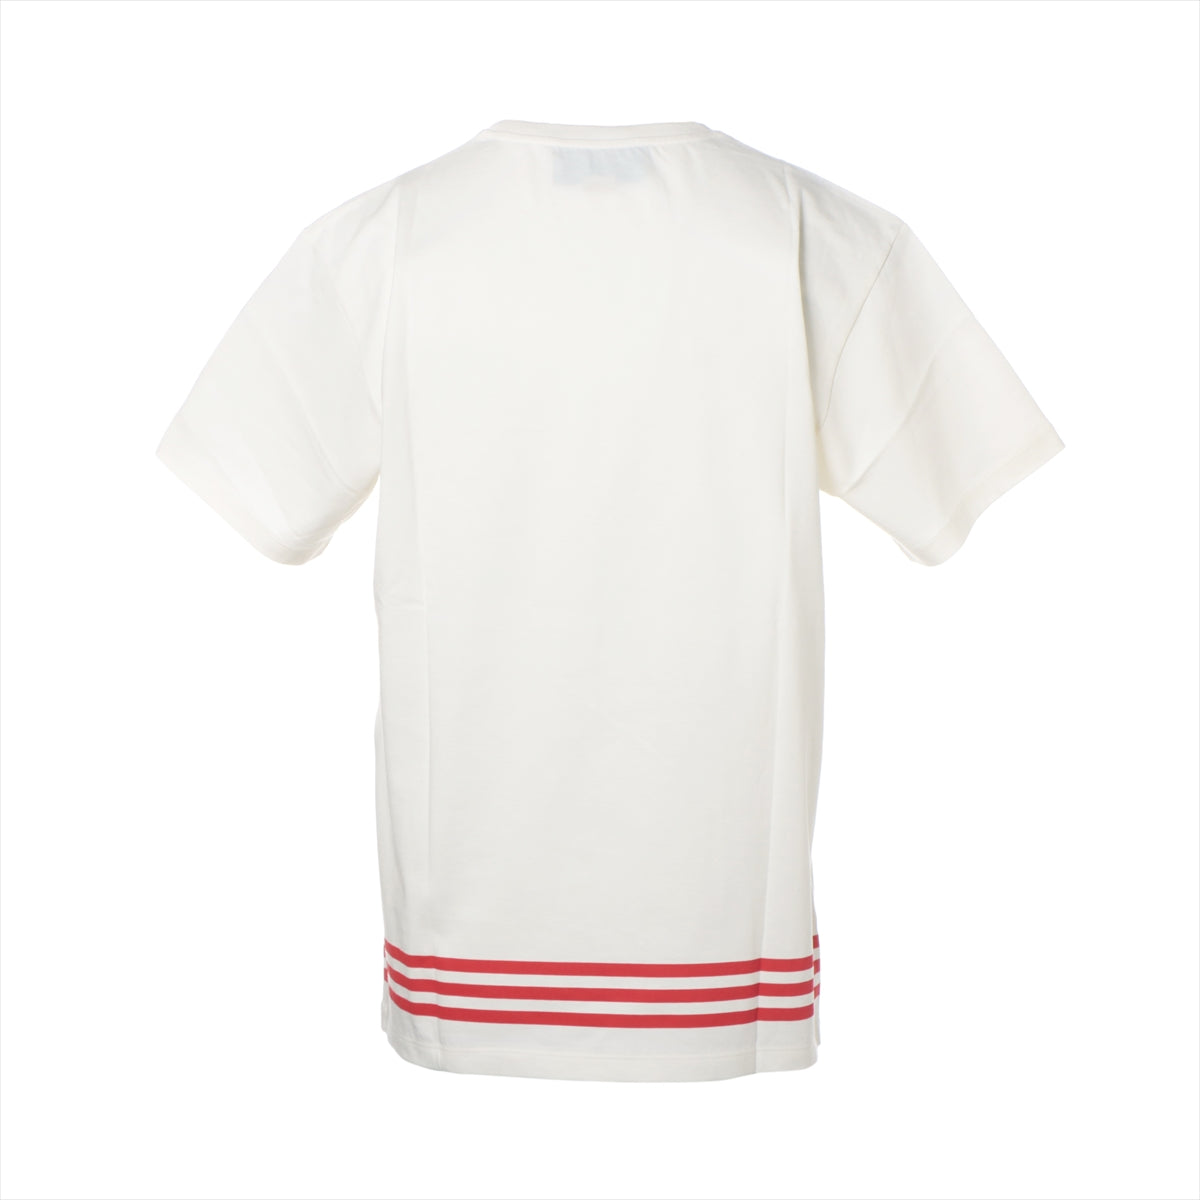 Gucci x adidas Cotton T-shirt S Men's Red x white  717422